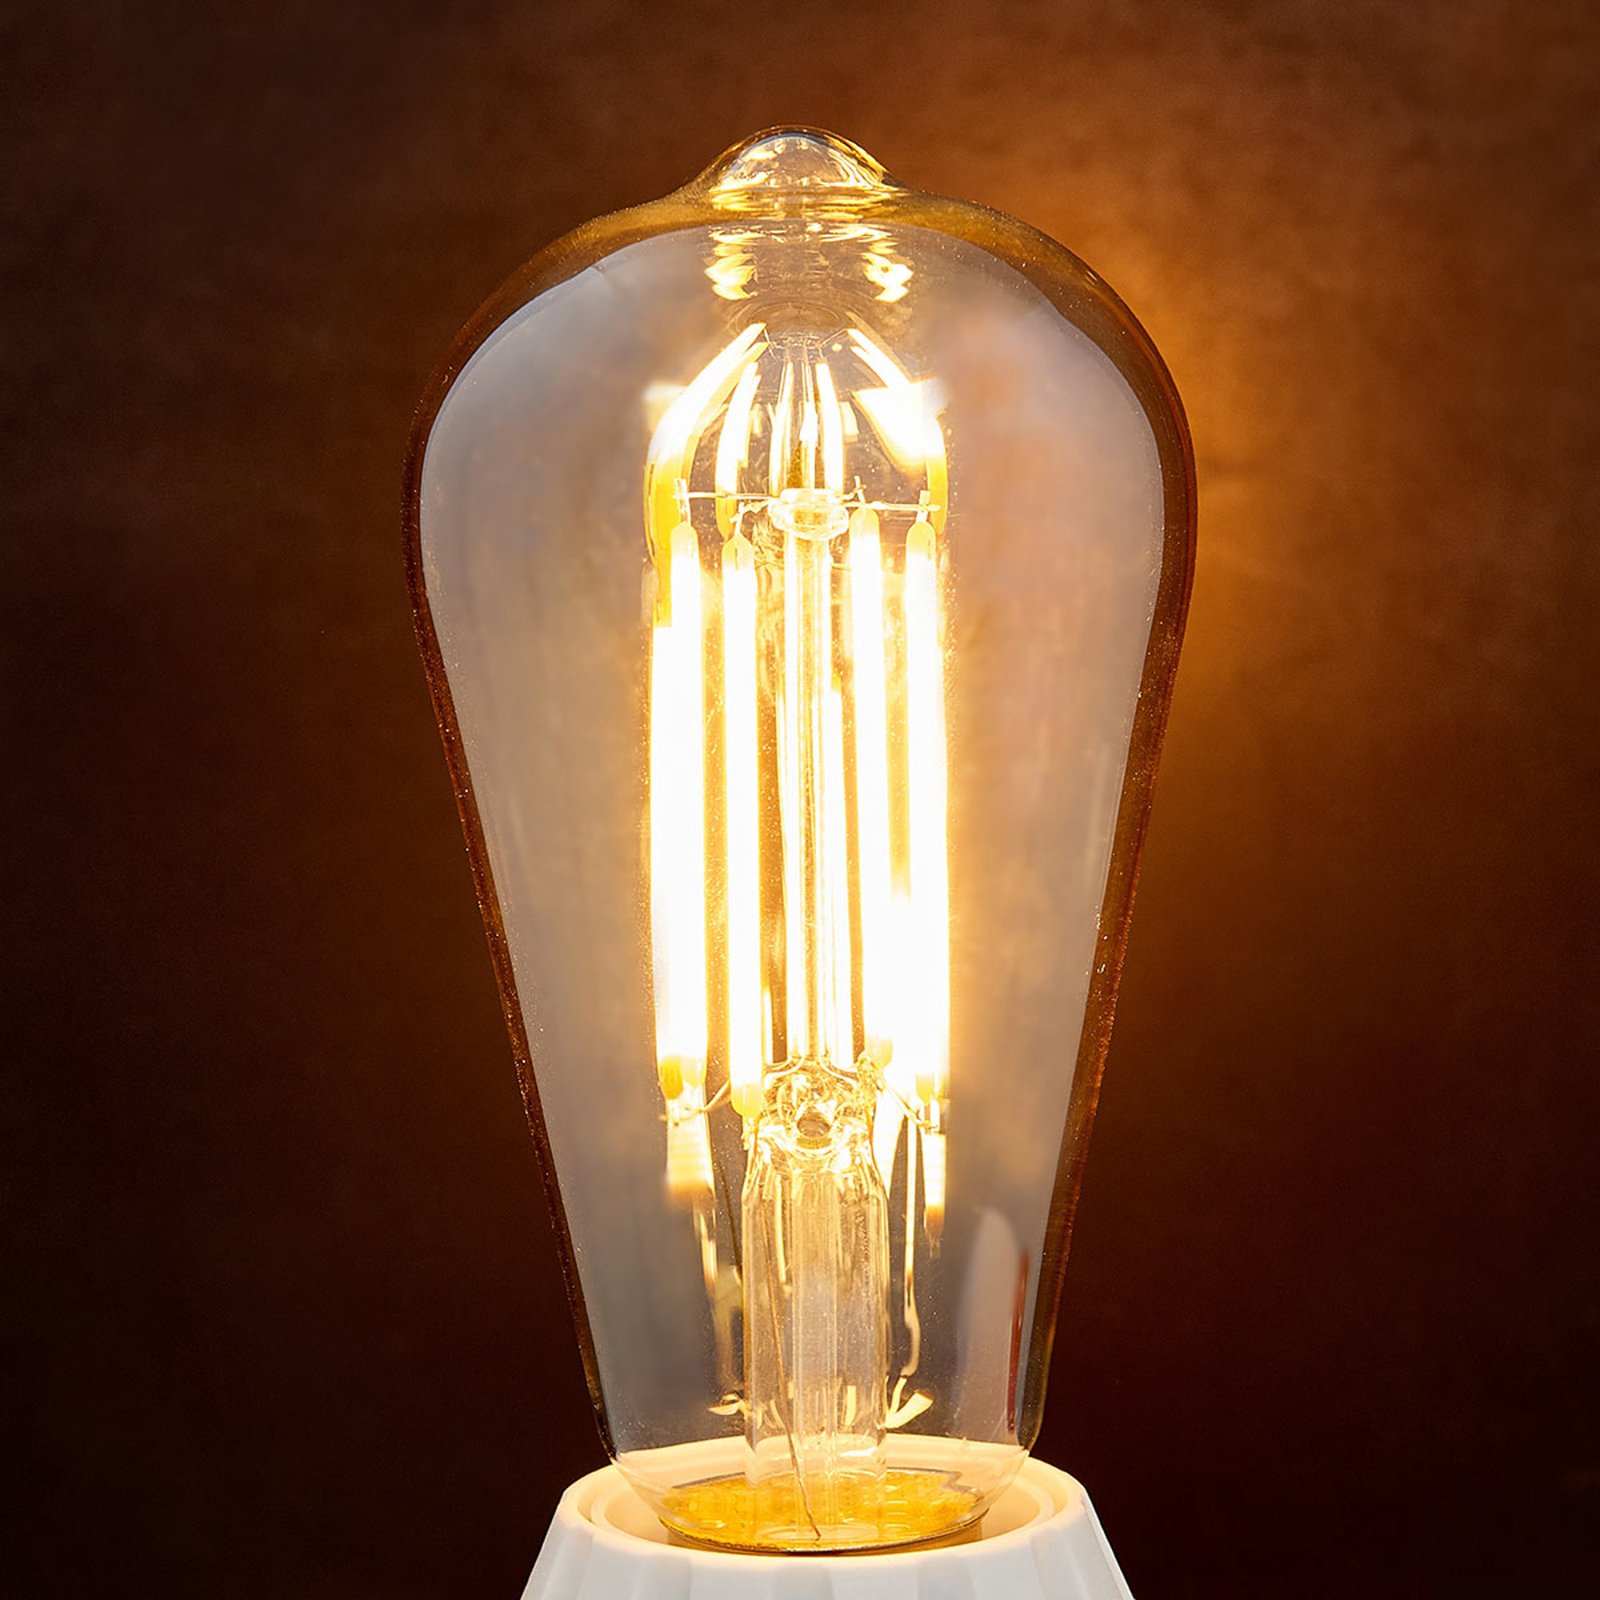 E27 LED rustieke lamp 6W 500lm amber 2 per set